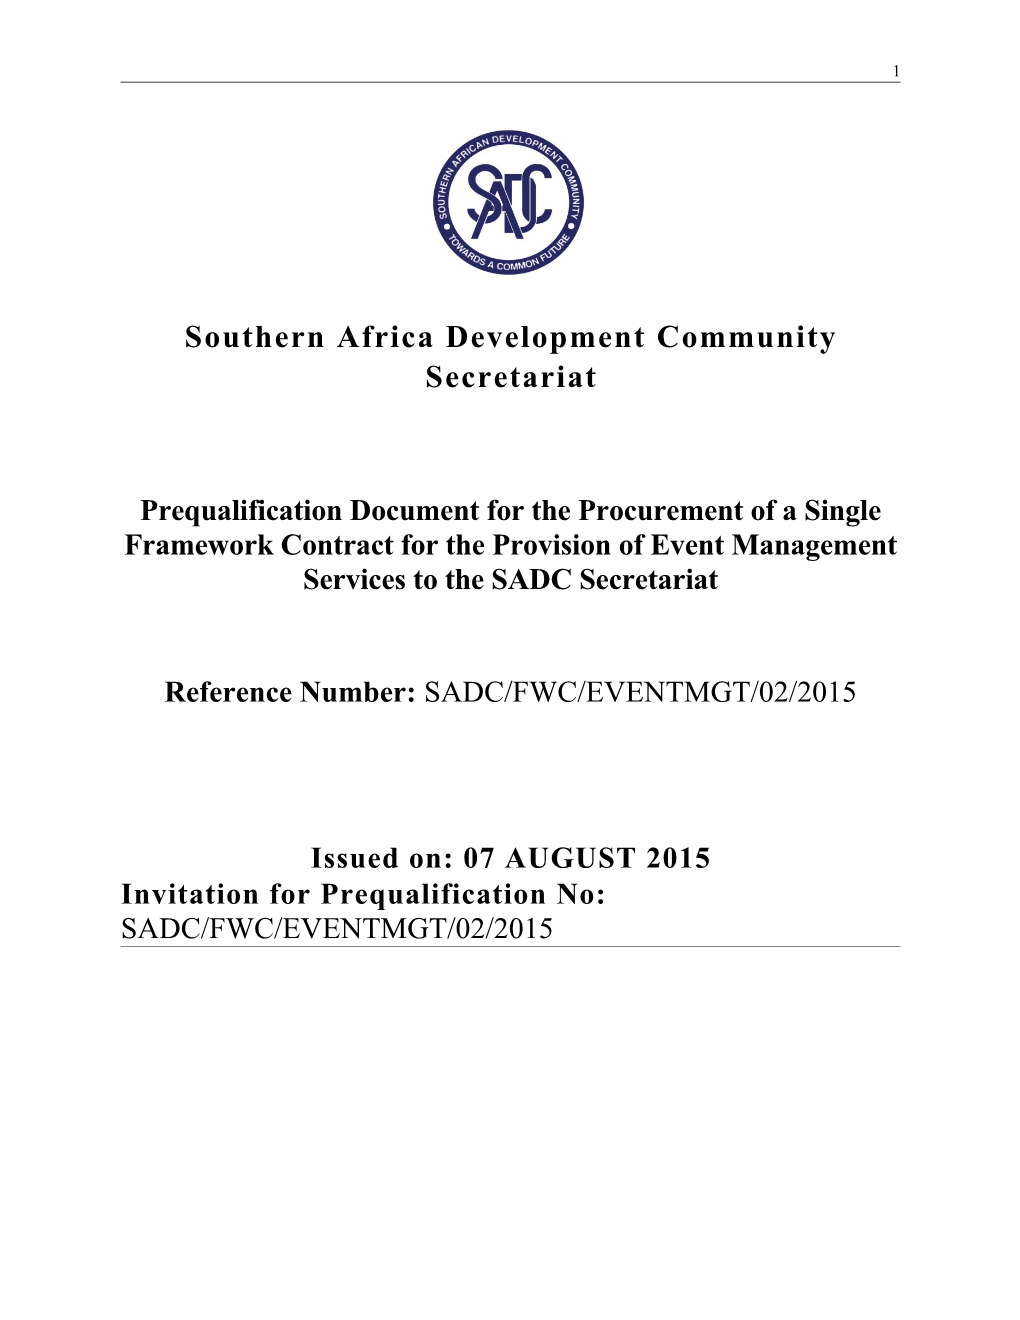 Southern Africa Development Community Secretariat